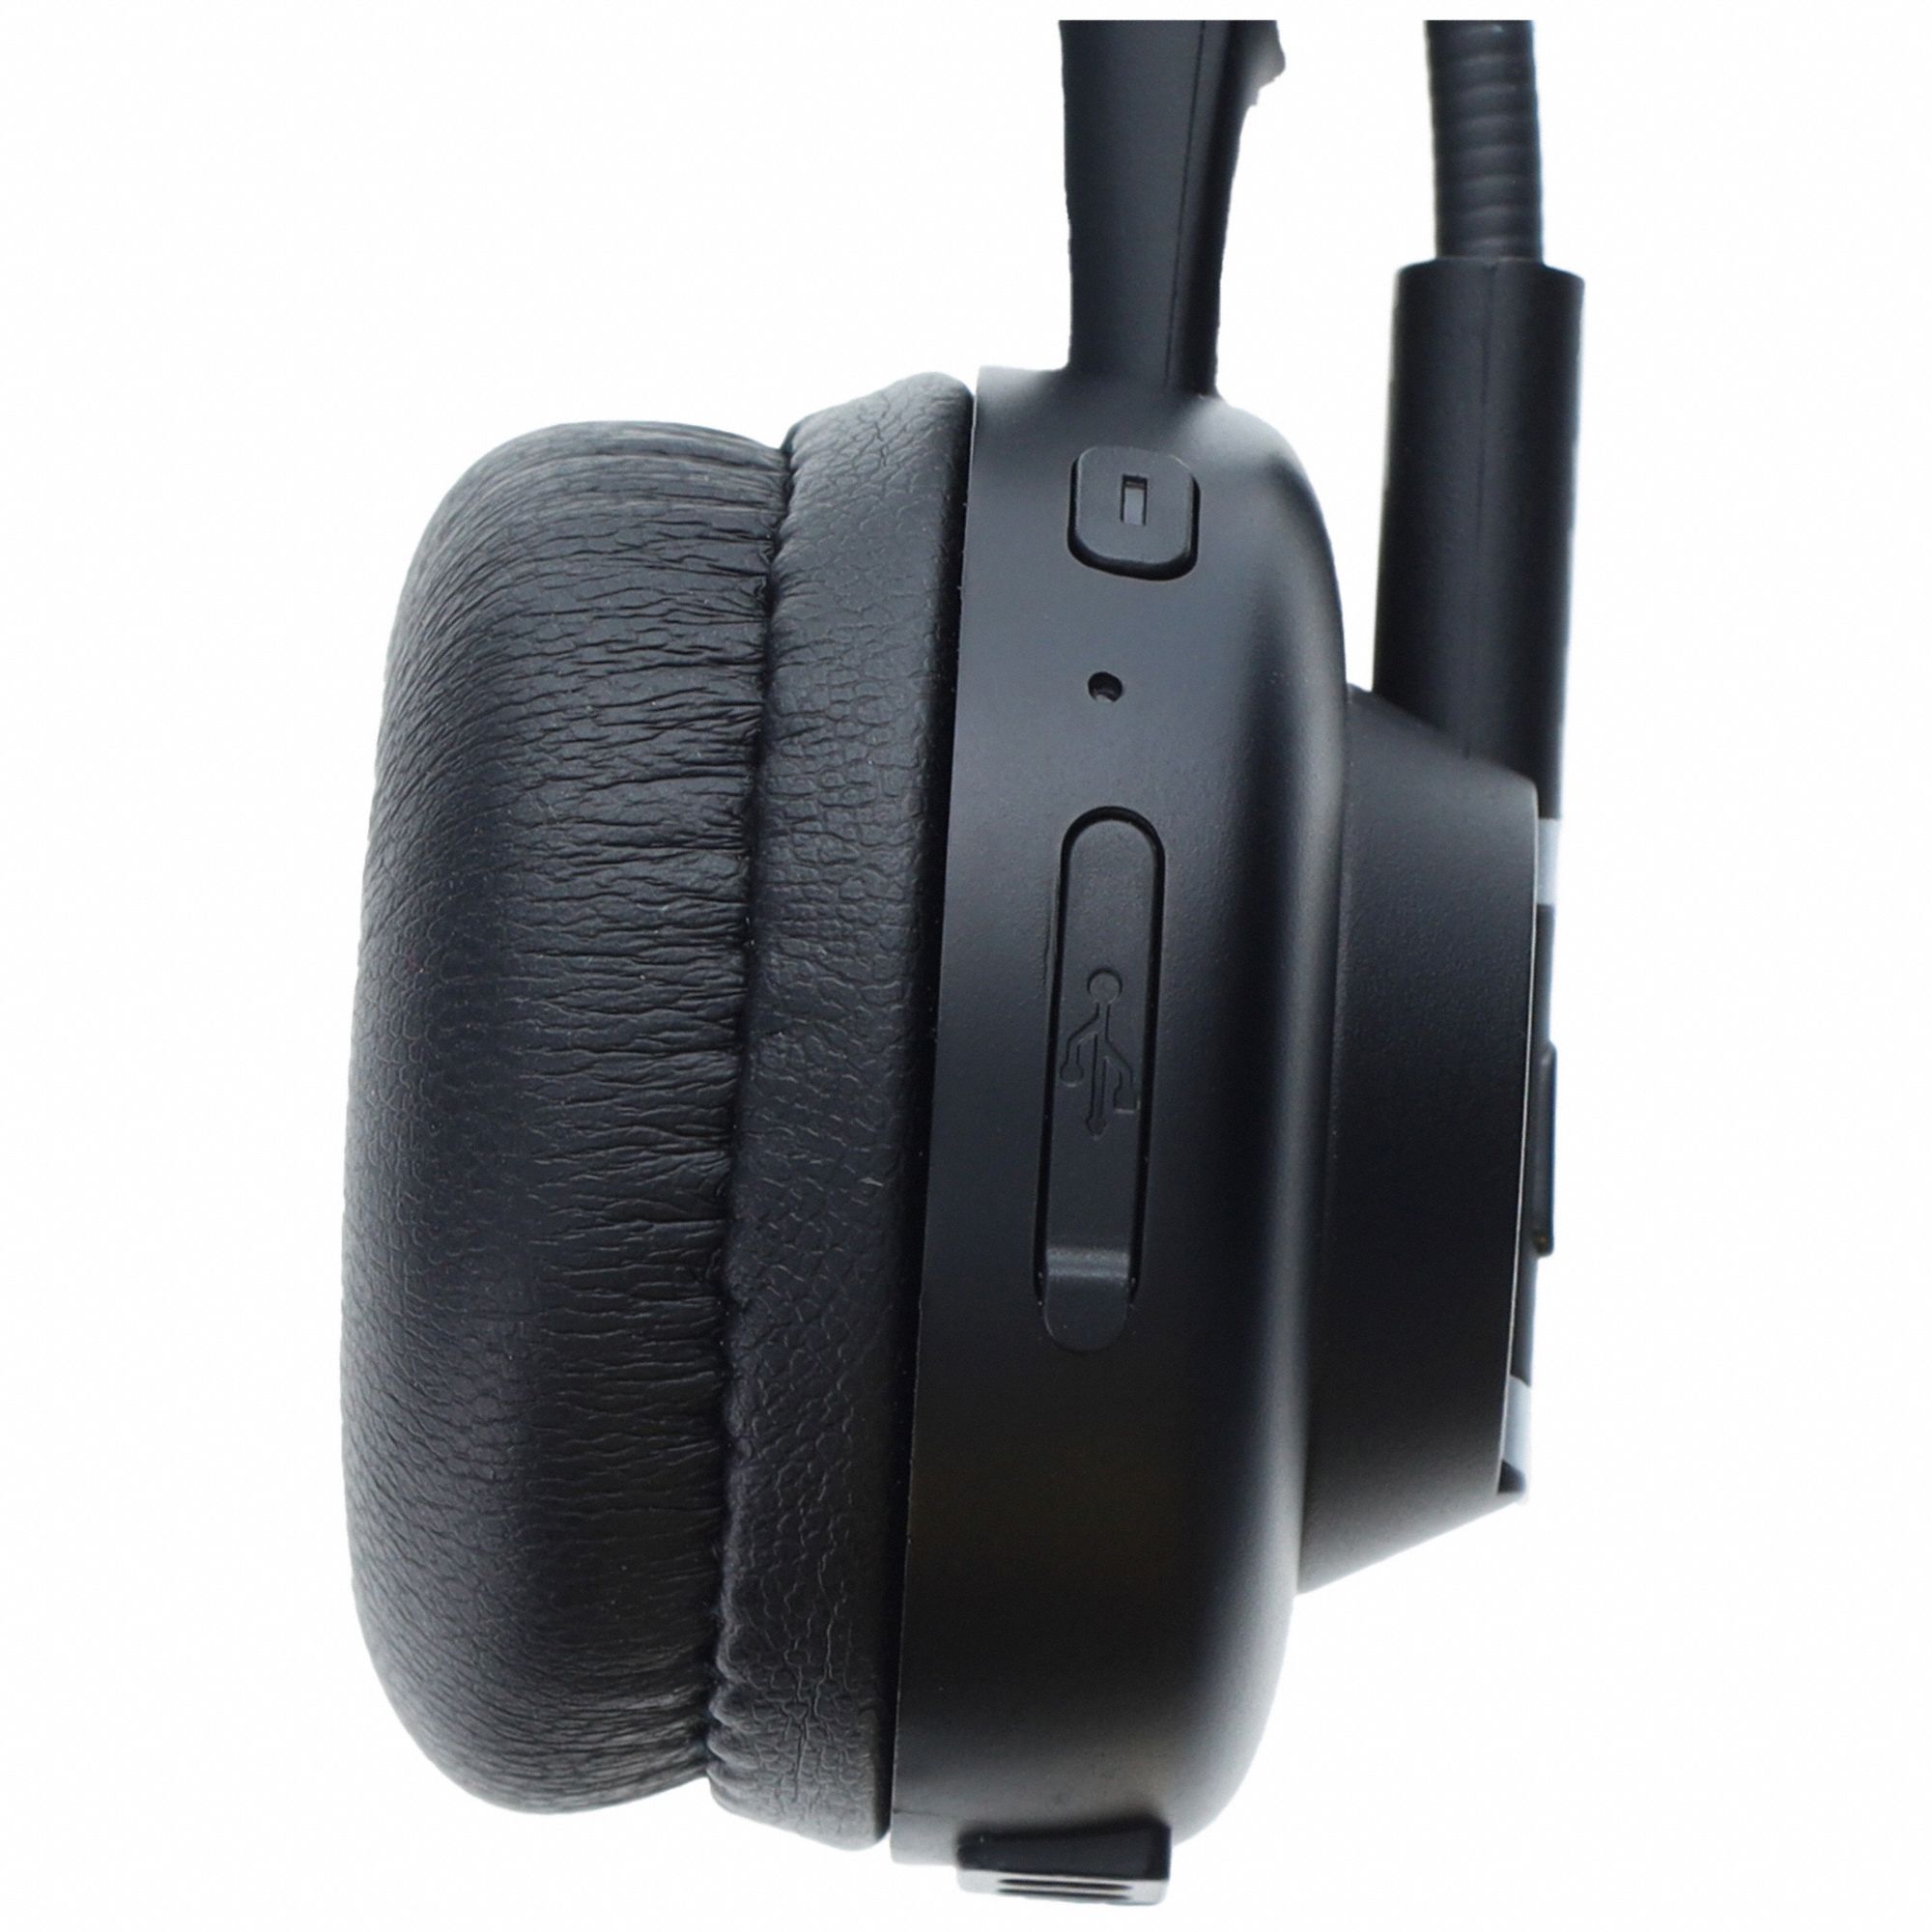 Noise-Canceling Mono Bluetooth Headset: 33 ft Range, 840 min Talk Time, 12,000 min Standby Time